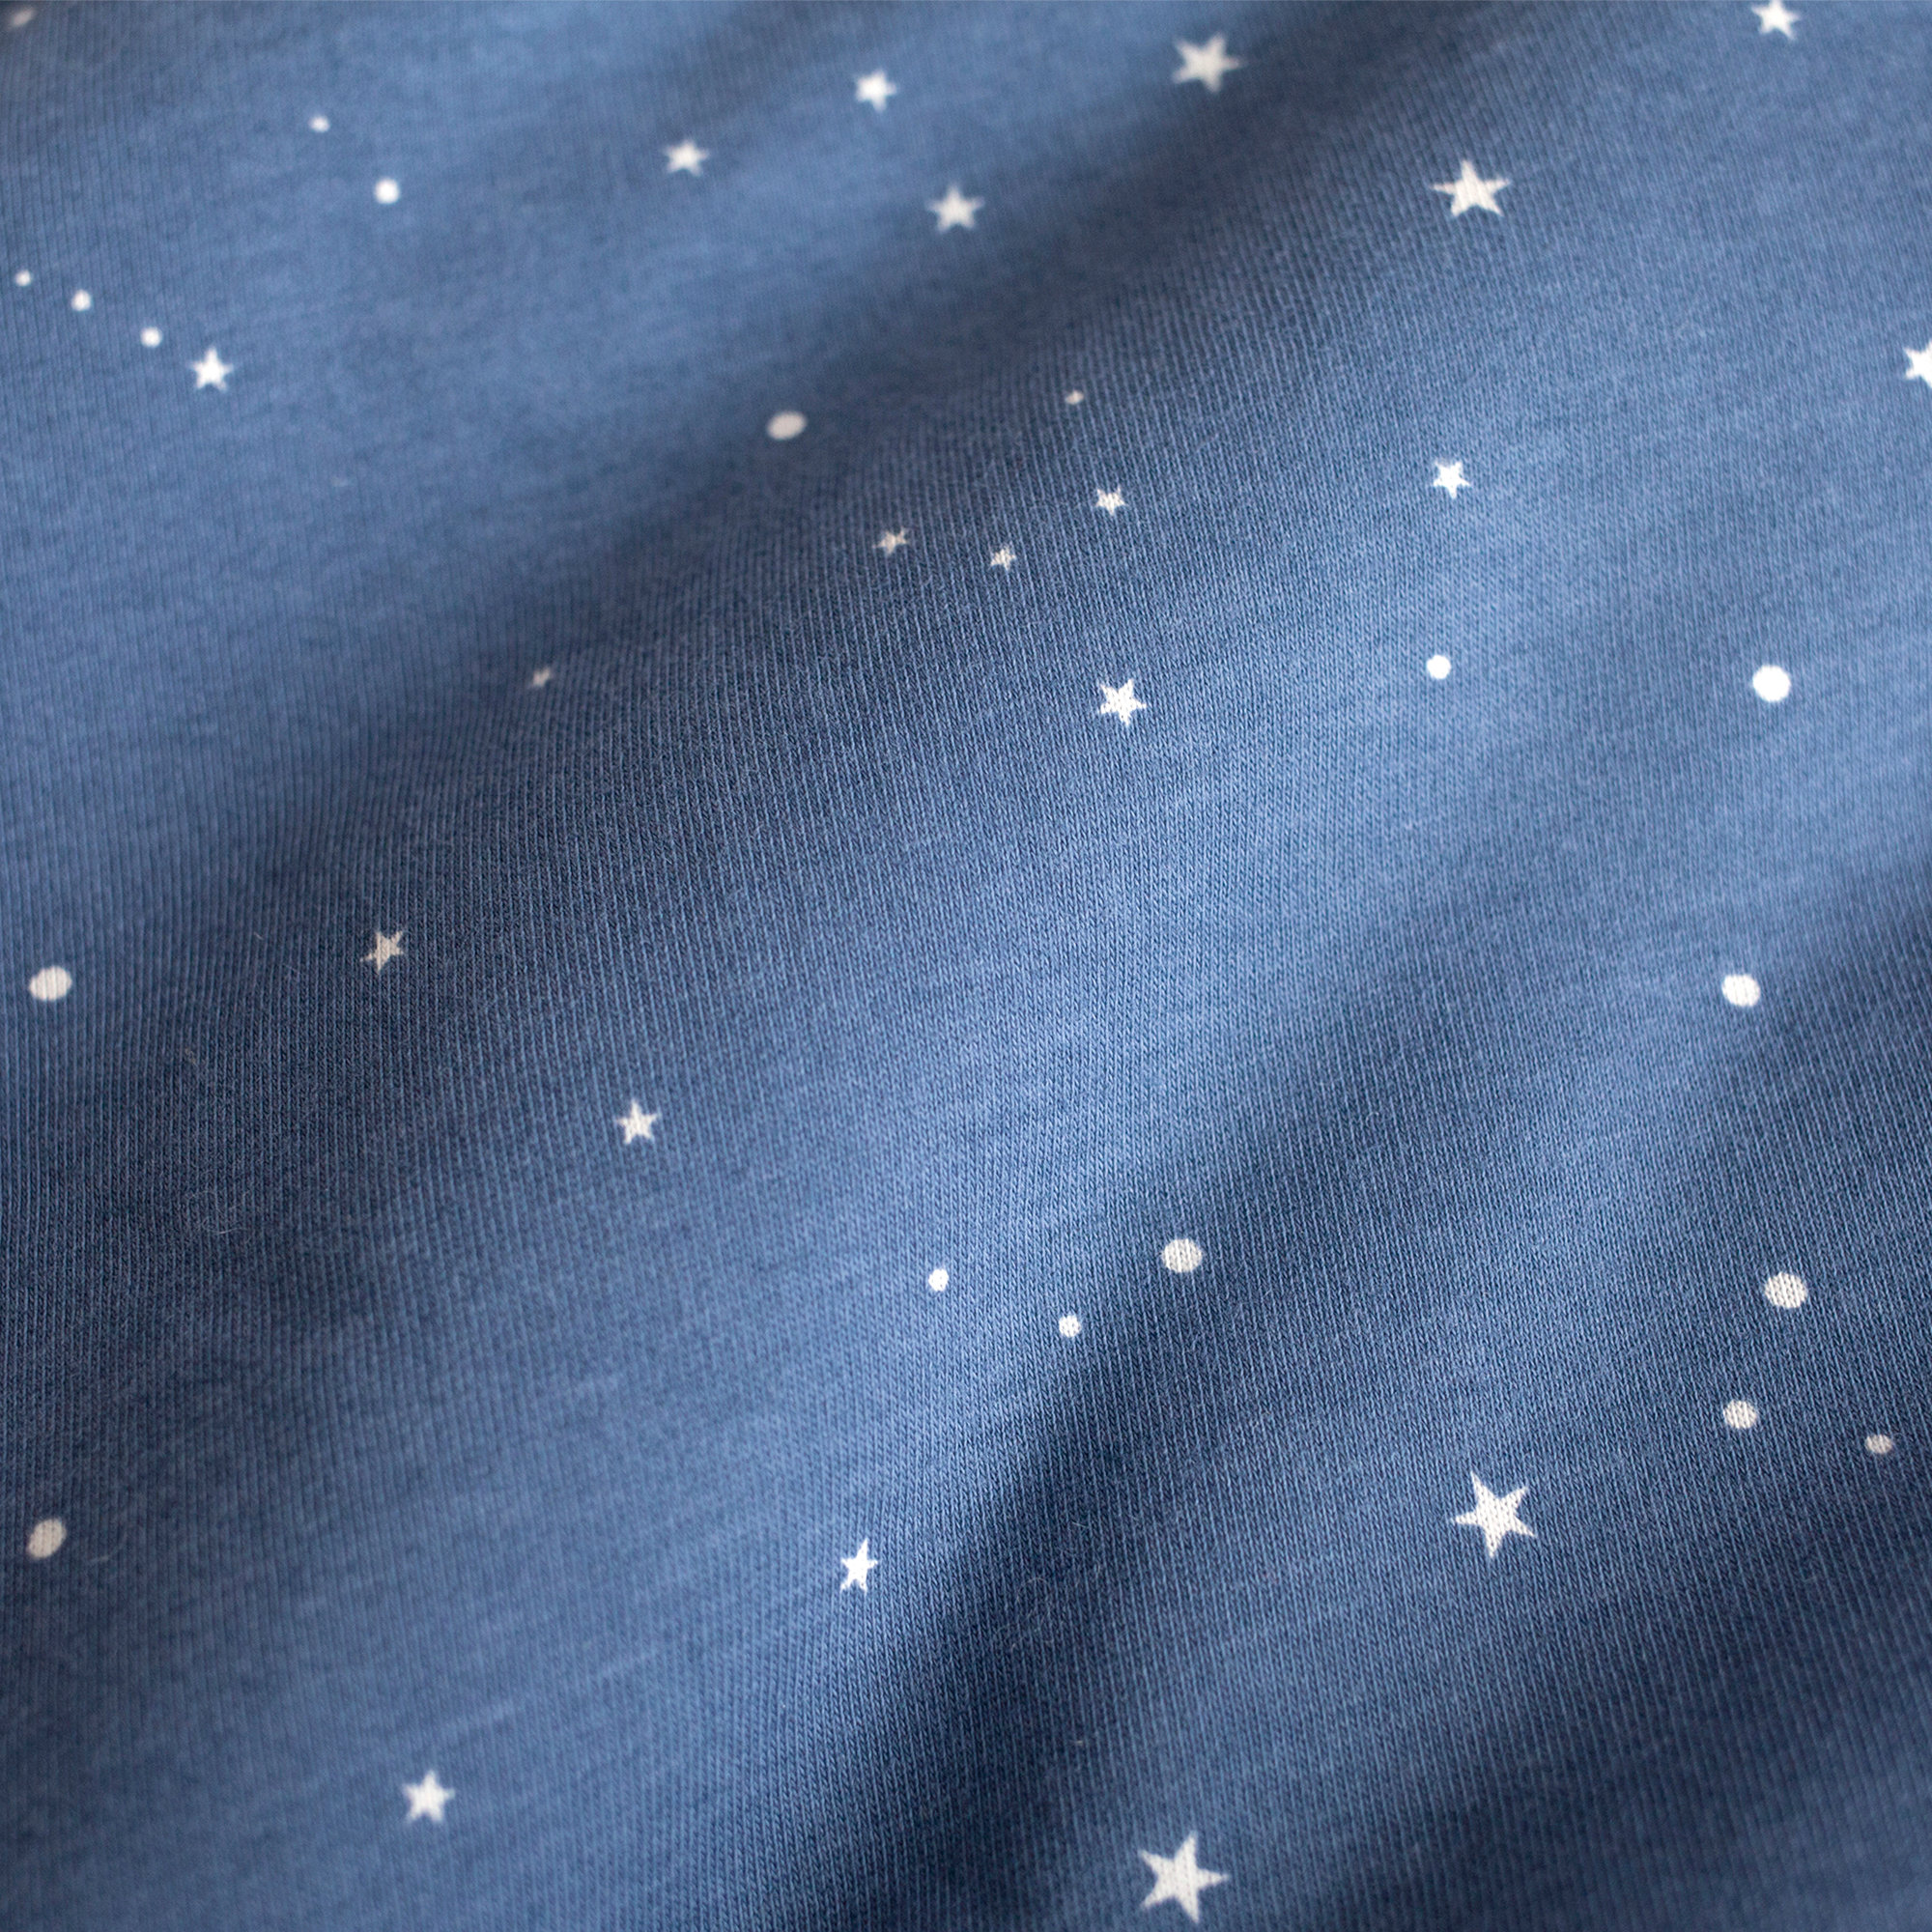 Nestchen Laufgitter Pady jersey + jersey 100x100x28cm STARY Little stars print shade